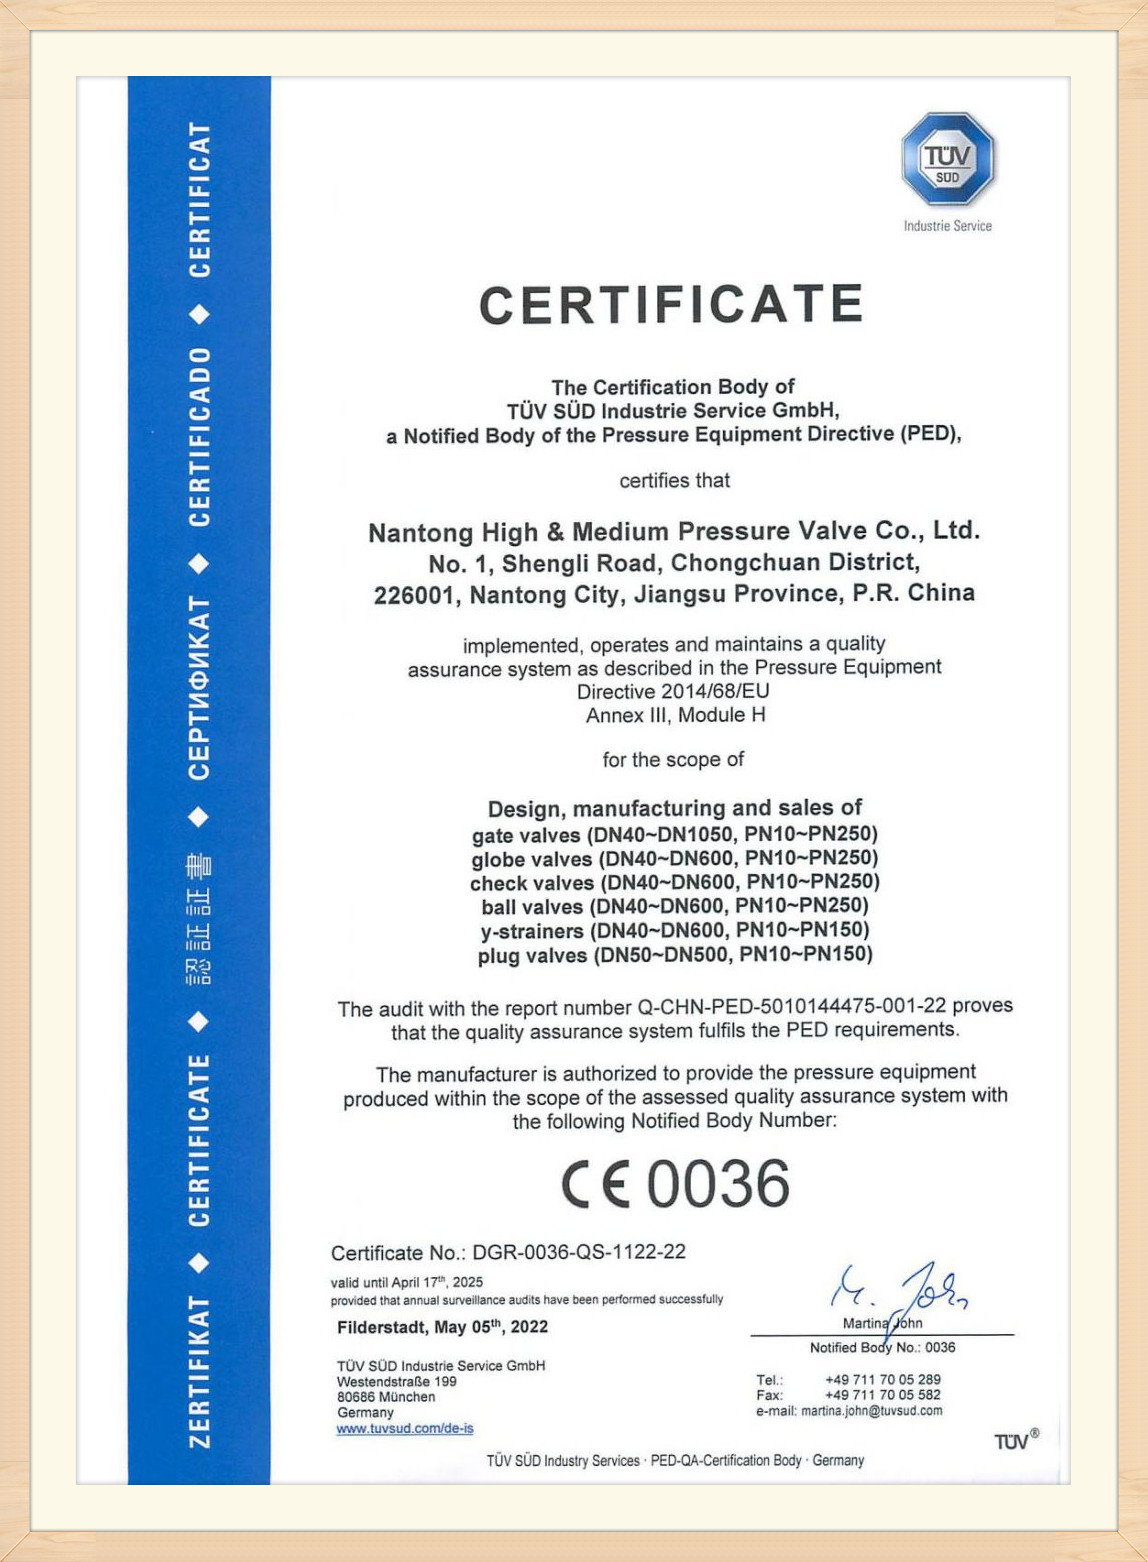 Nantong High and Medium Pressure Valve Co., Ltd. 